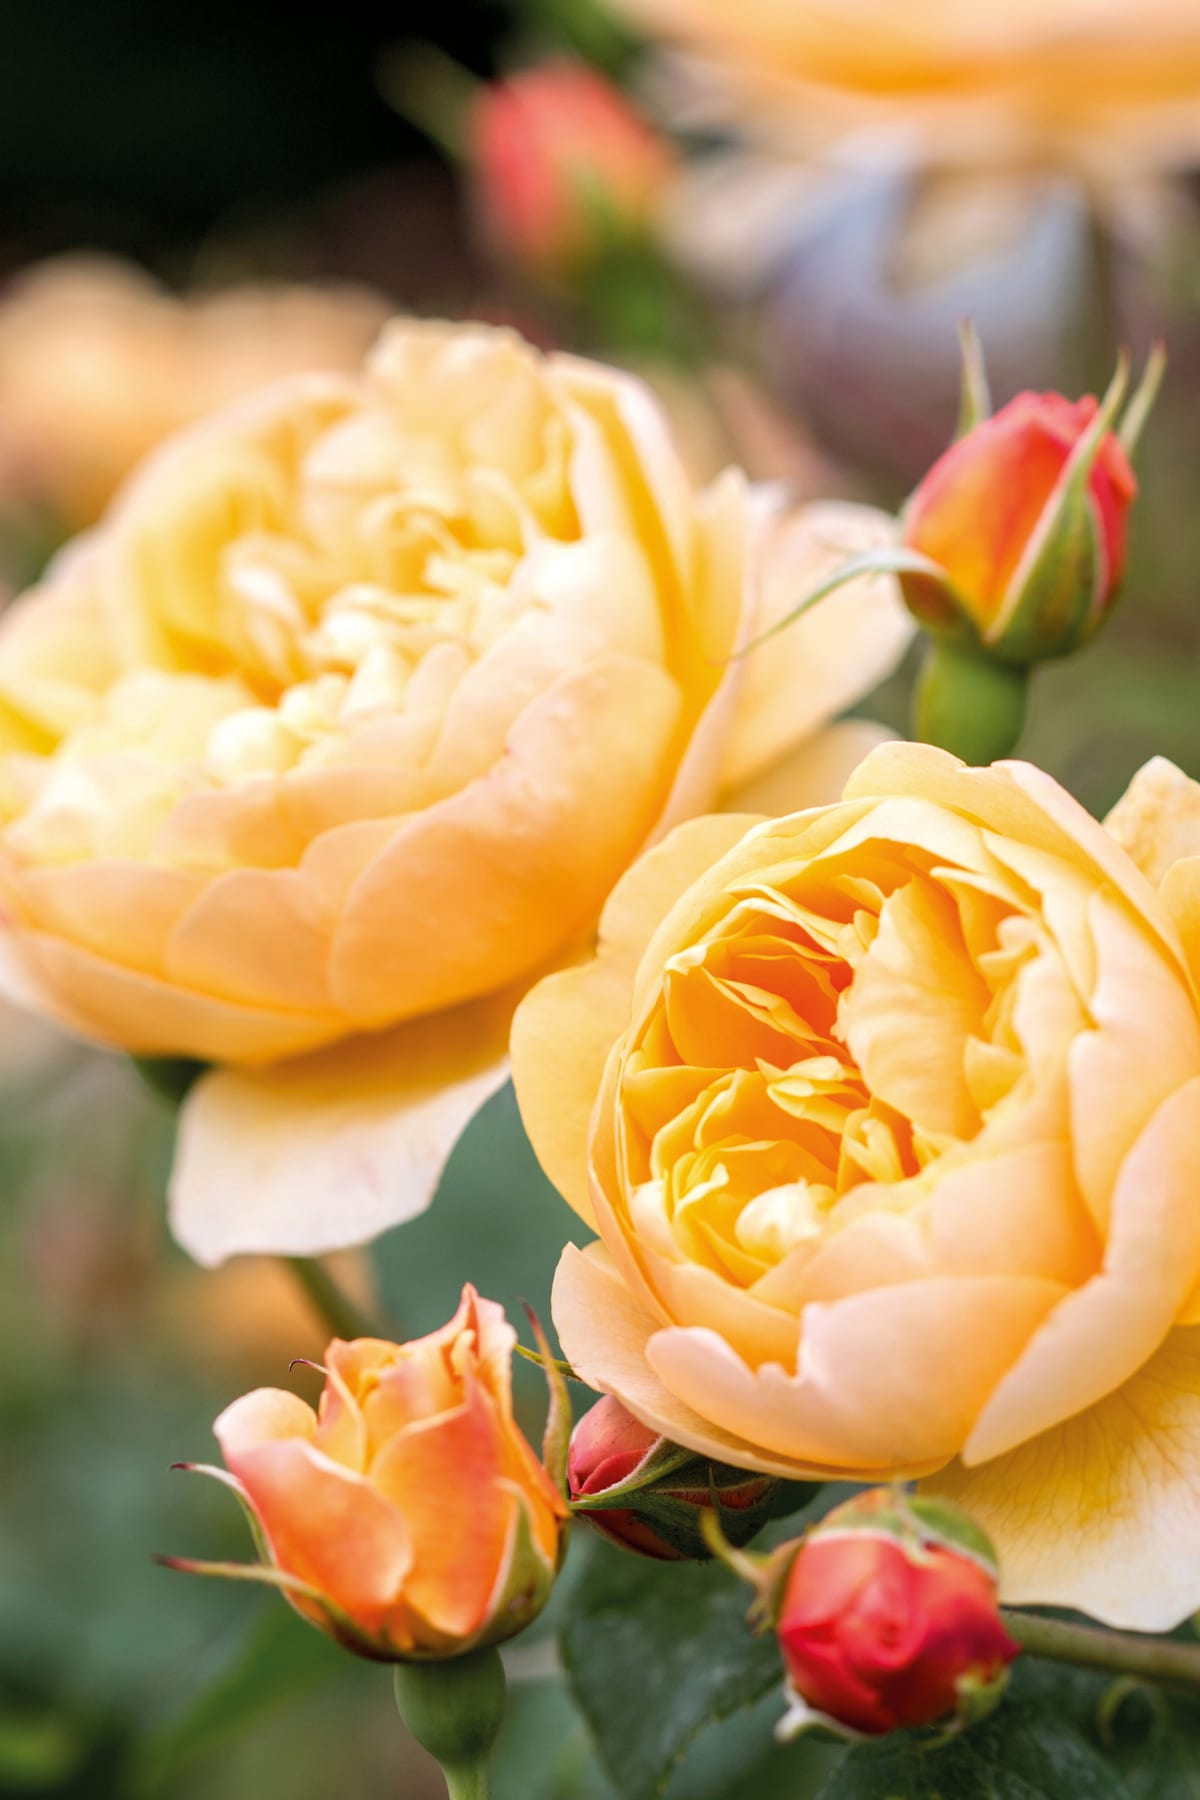 Rosa 'Roald Dahl' rose shaded gardens